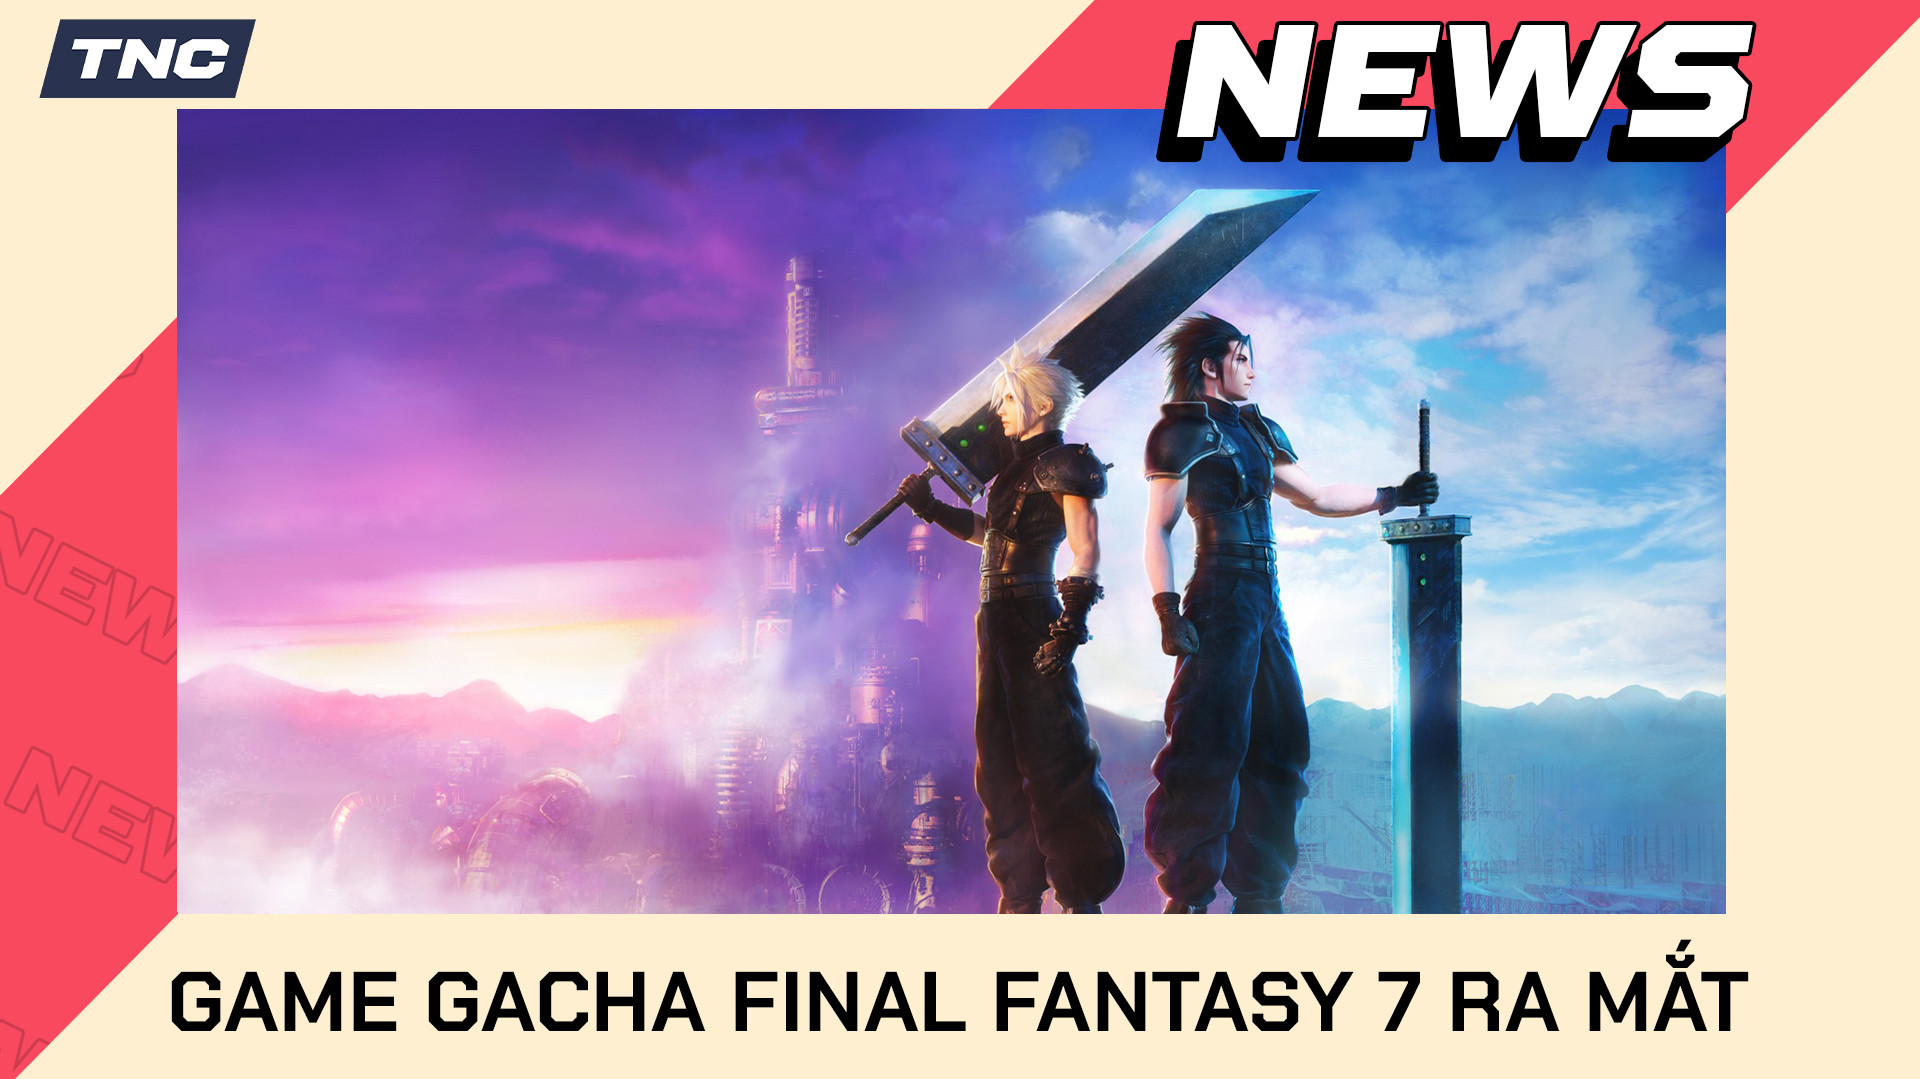 Game Gacha Final Fantasy 7 hứa hẹn 